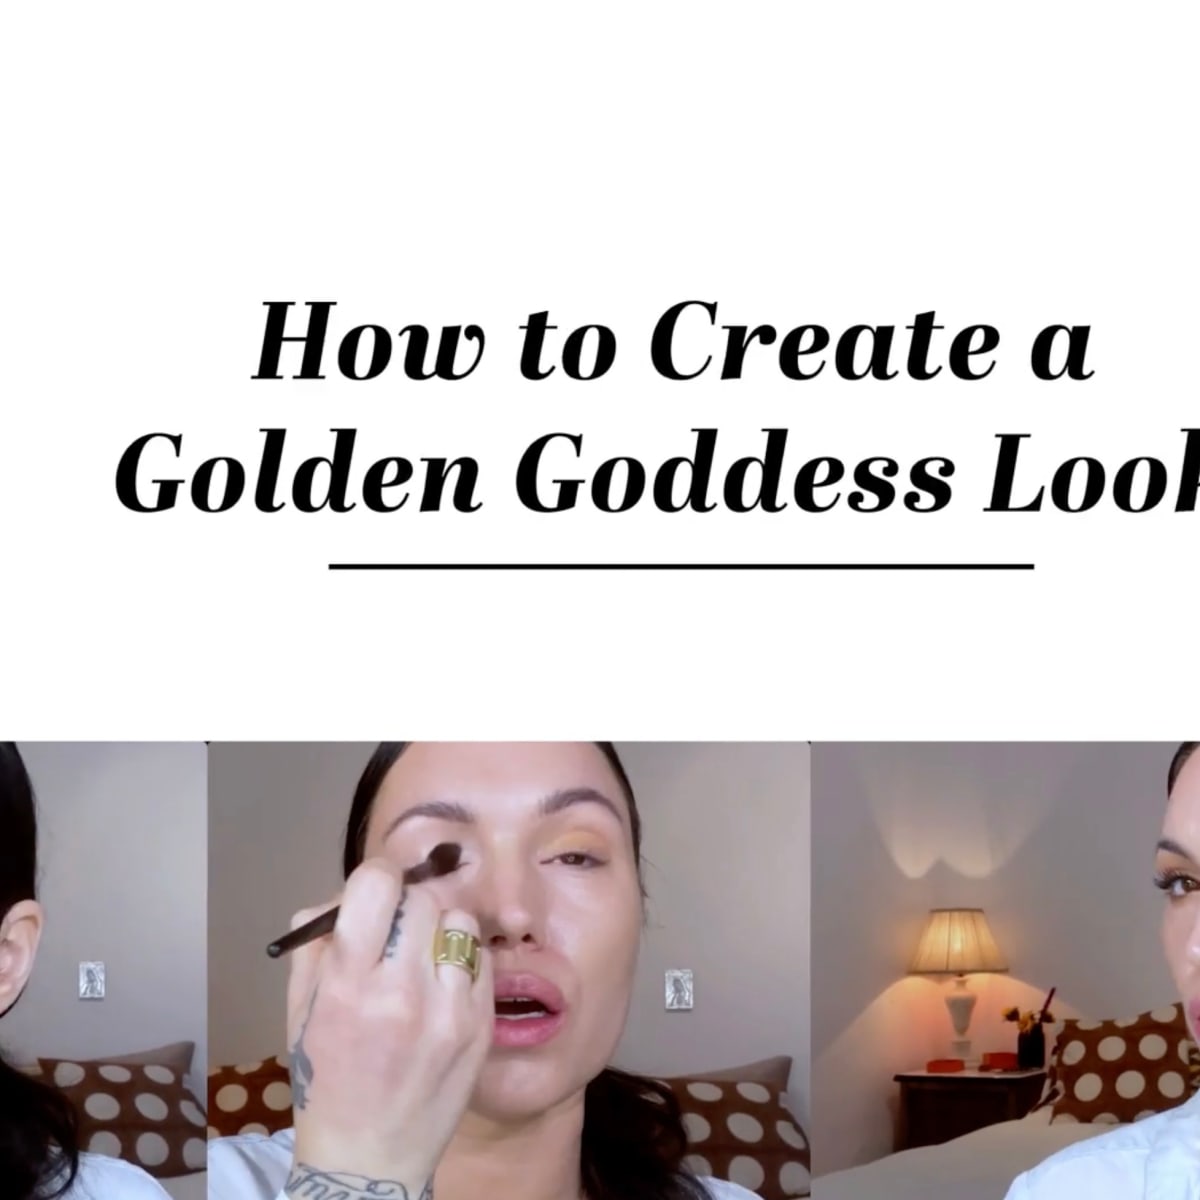 Golden Goddess - A Sunless Tanning Guide For Fair Skin - Swimsuit